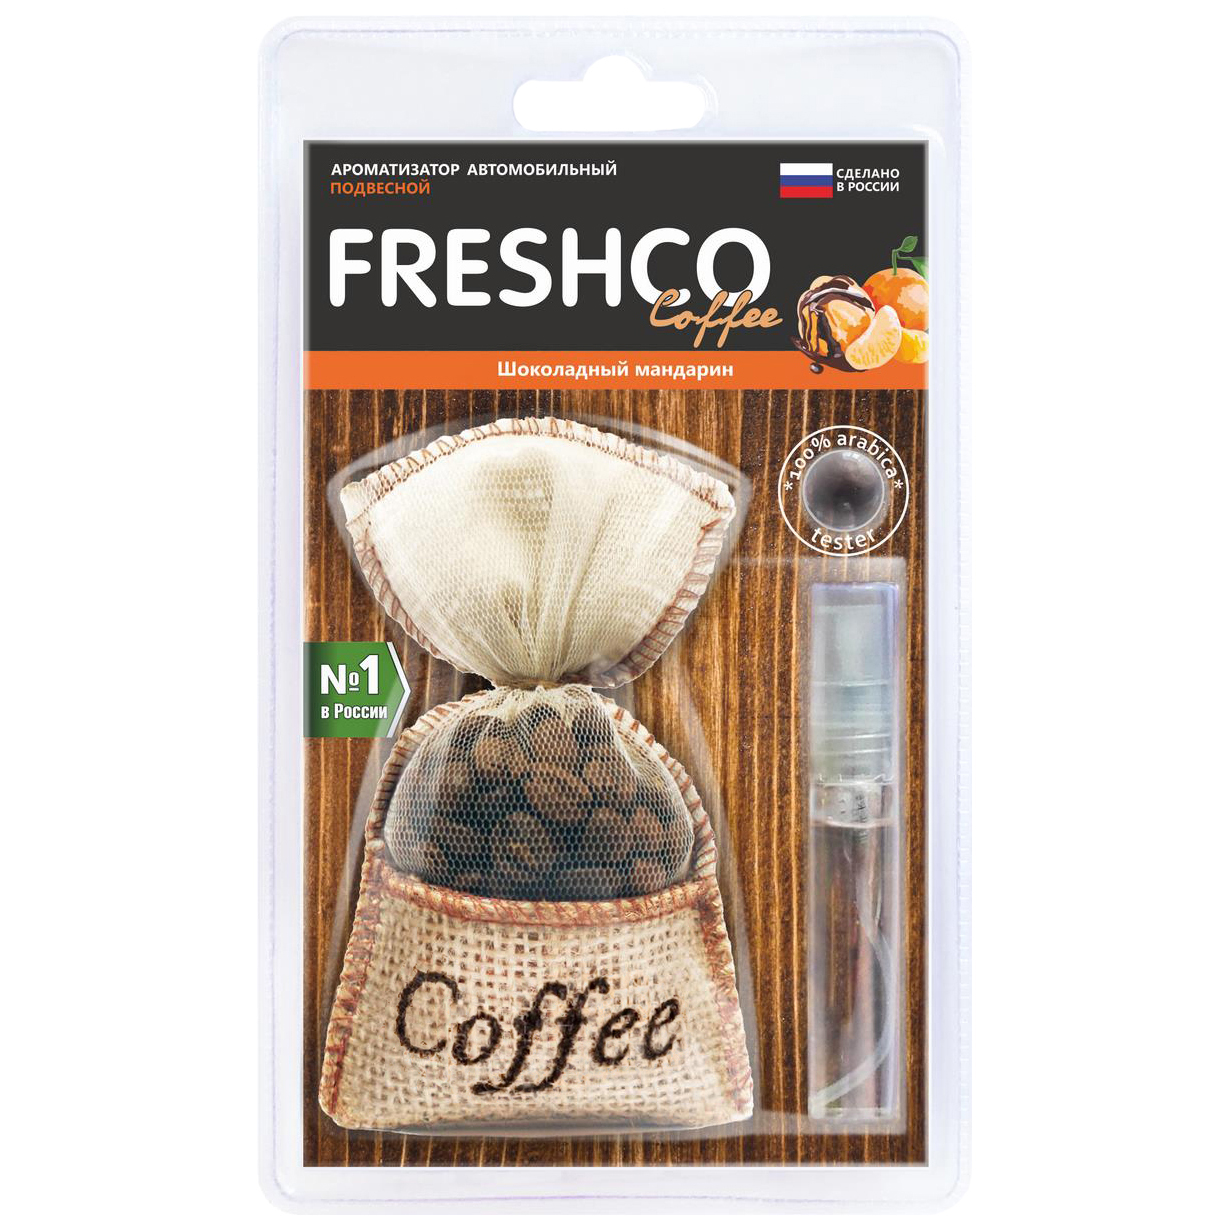 фото Ароматизатор подвесной гранулы (шоколадный мандарин) мешочек с кофе coffee freshco